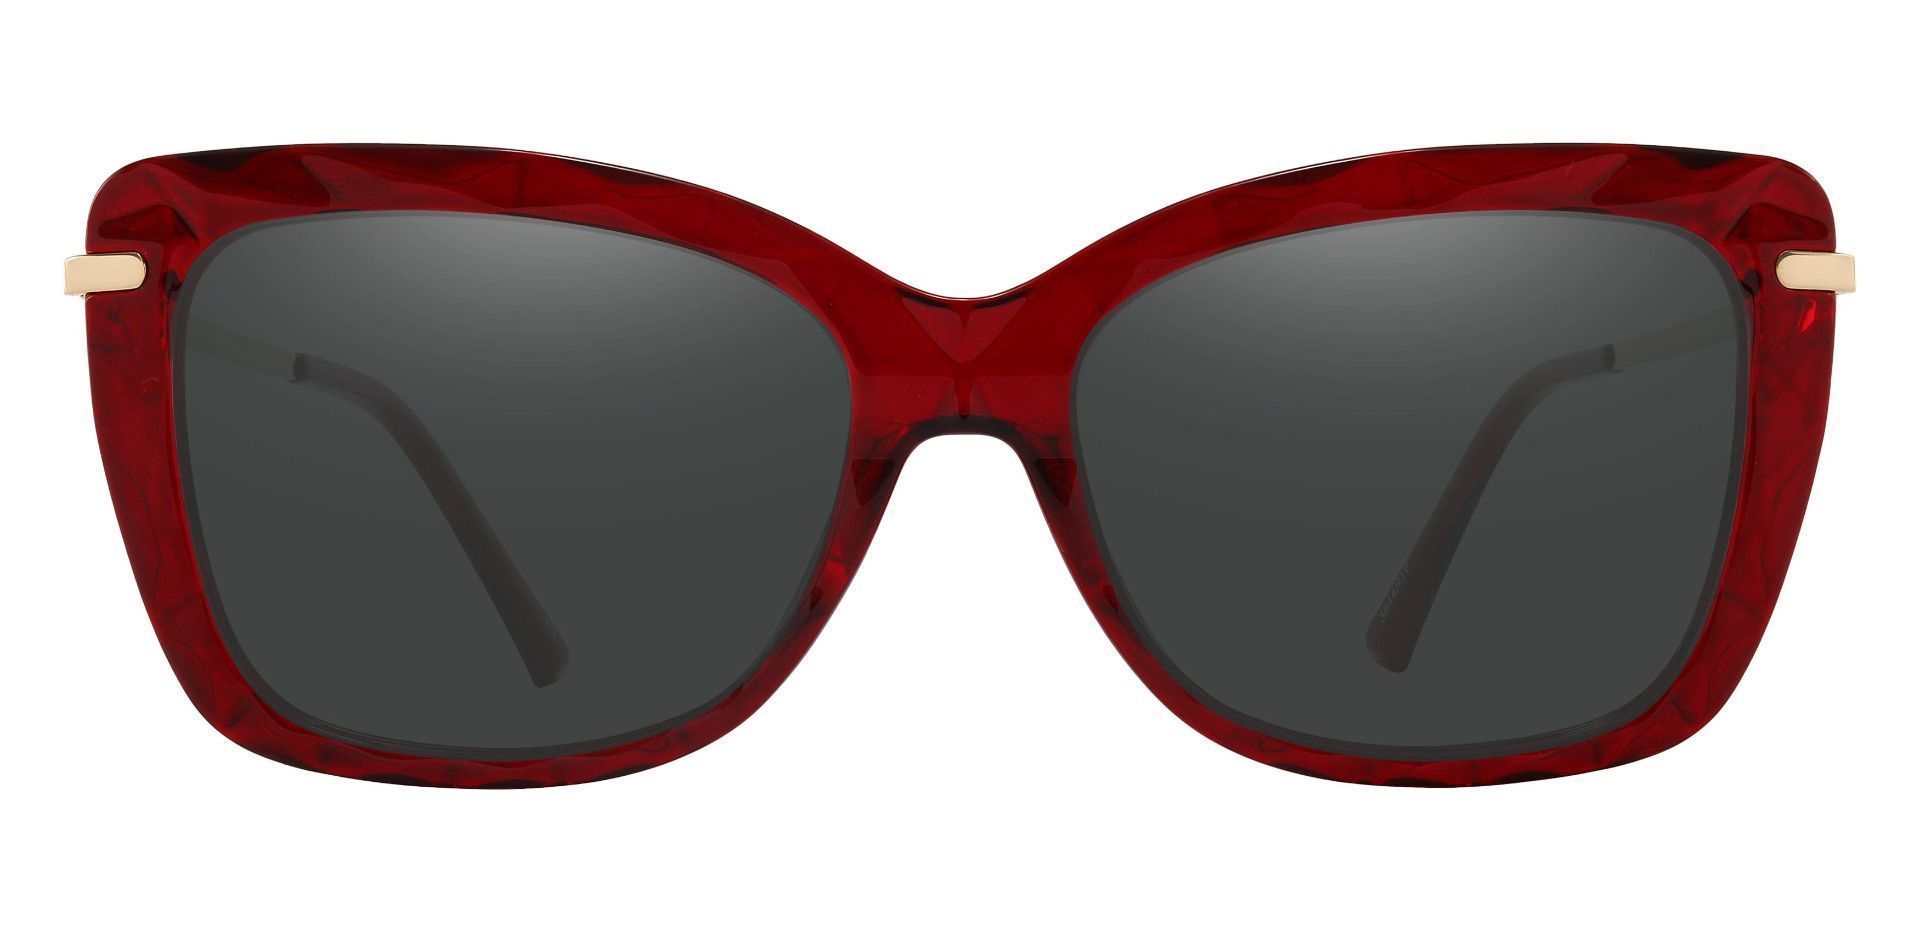 Shoshanna Rectangle Progressive Sunglasses - Red Frame With Gray Lenses